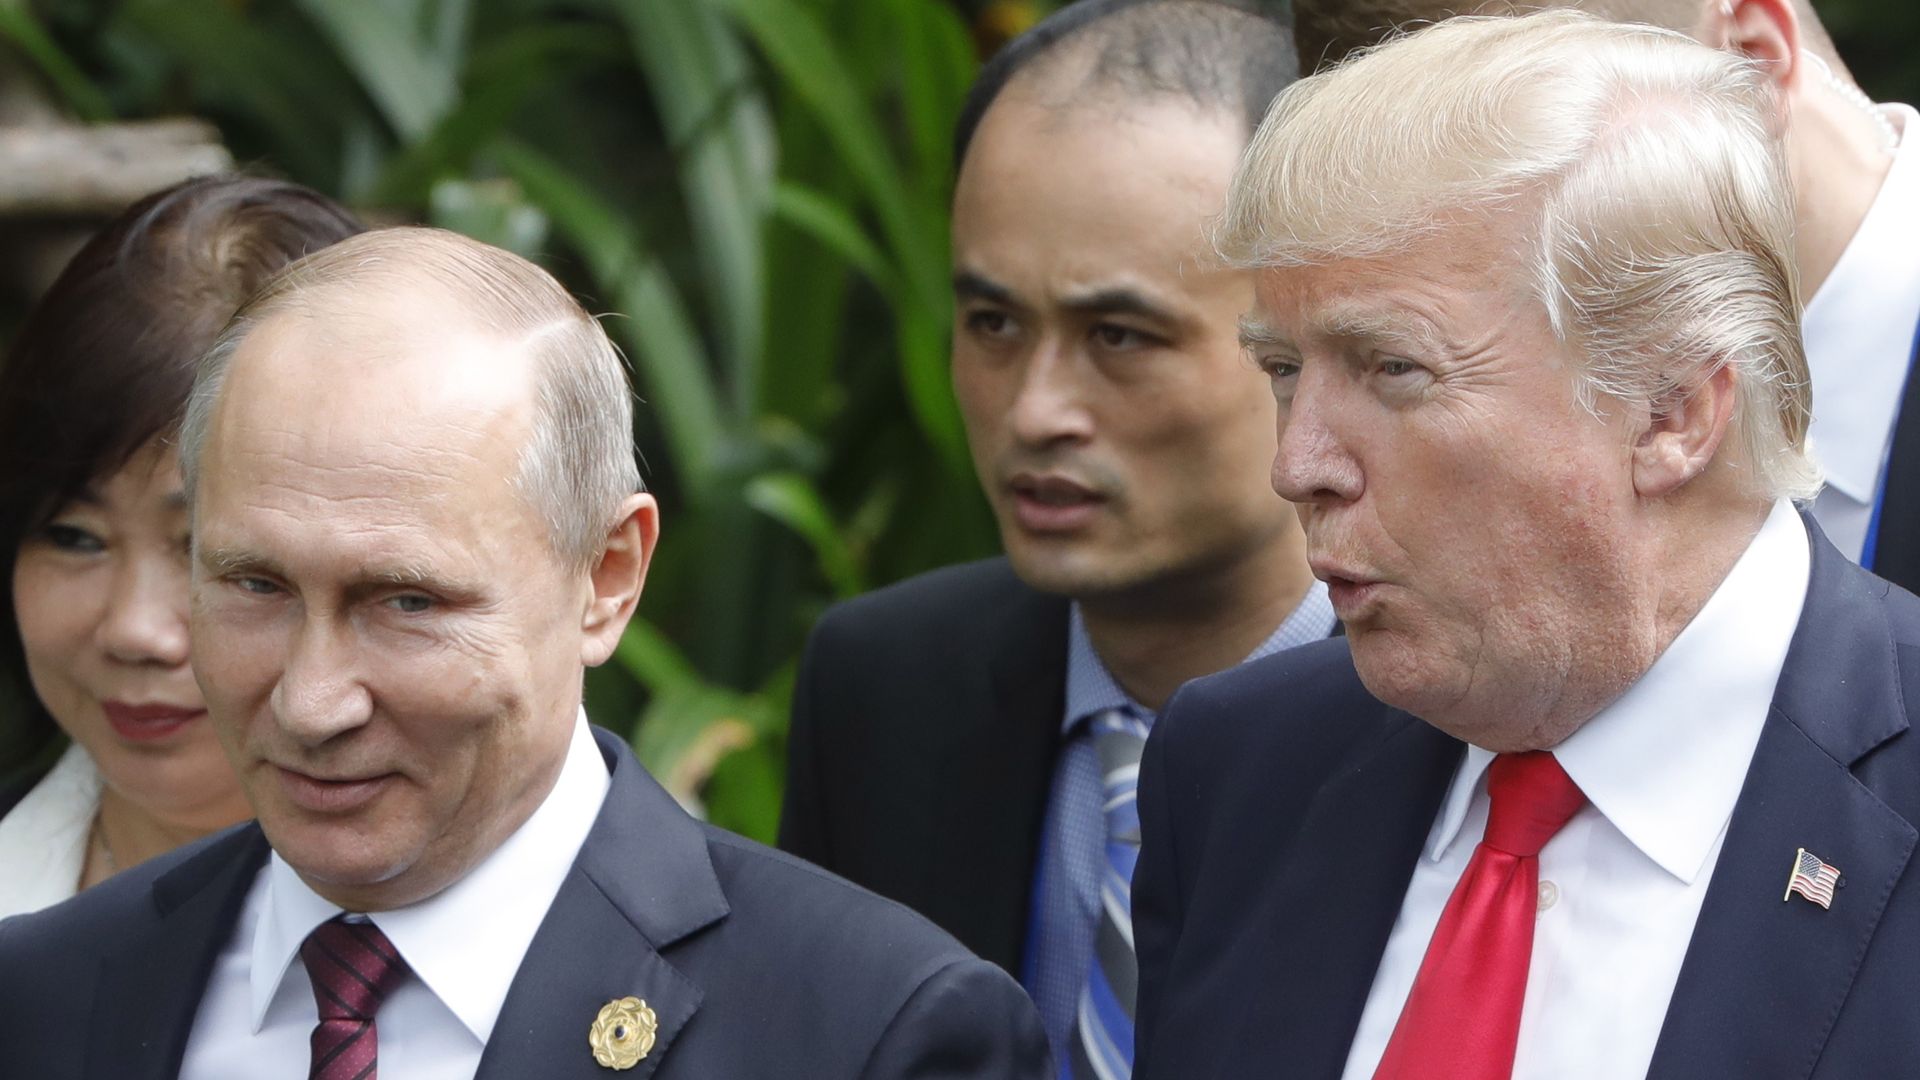 President Trump and Vladimir Putin preparing for a photoshoot